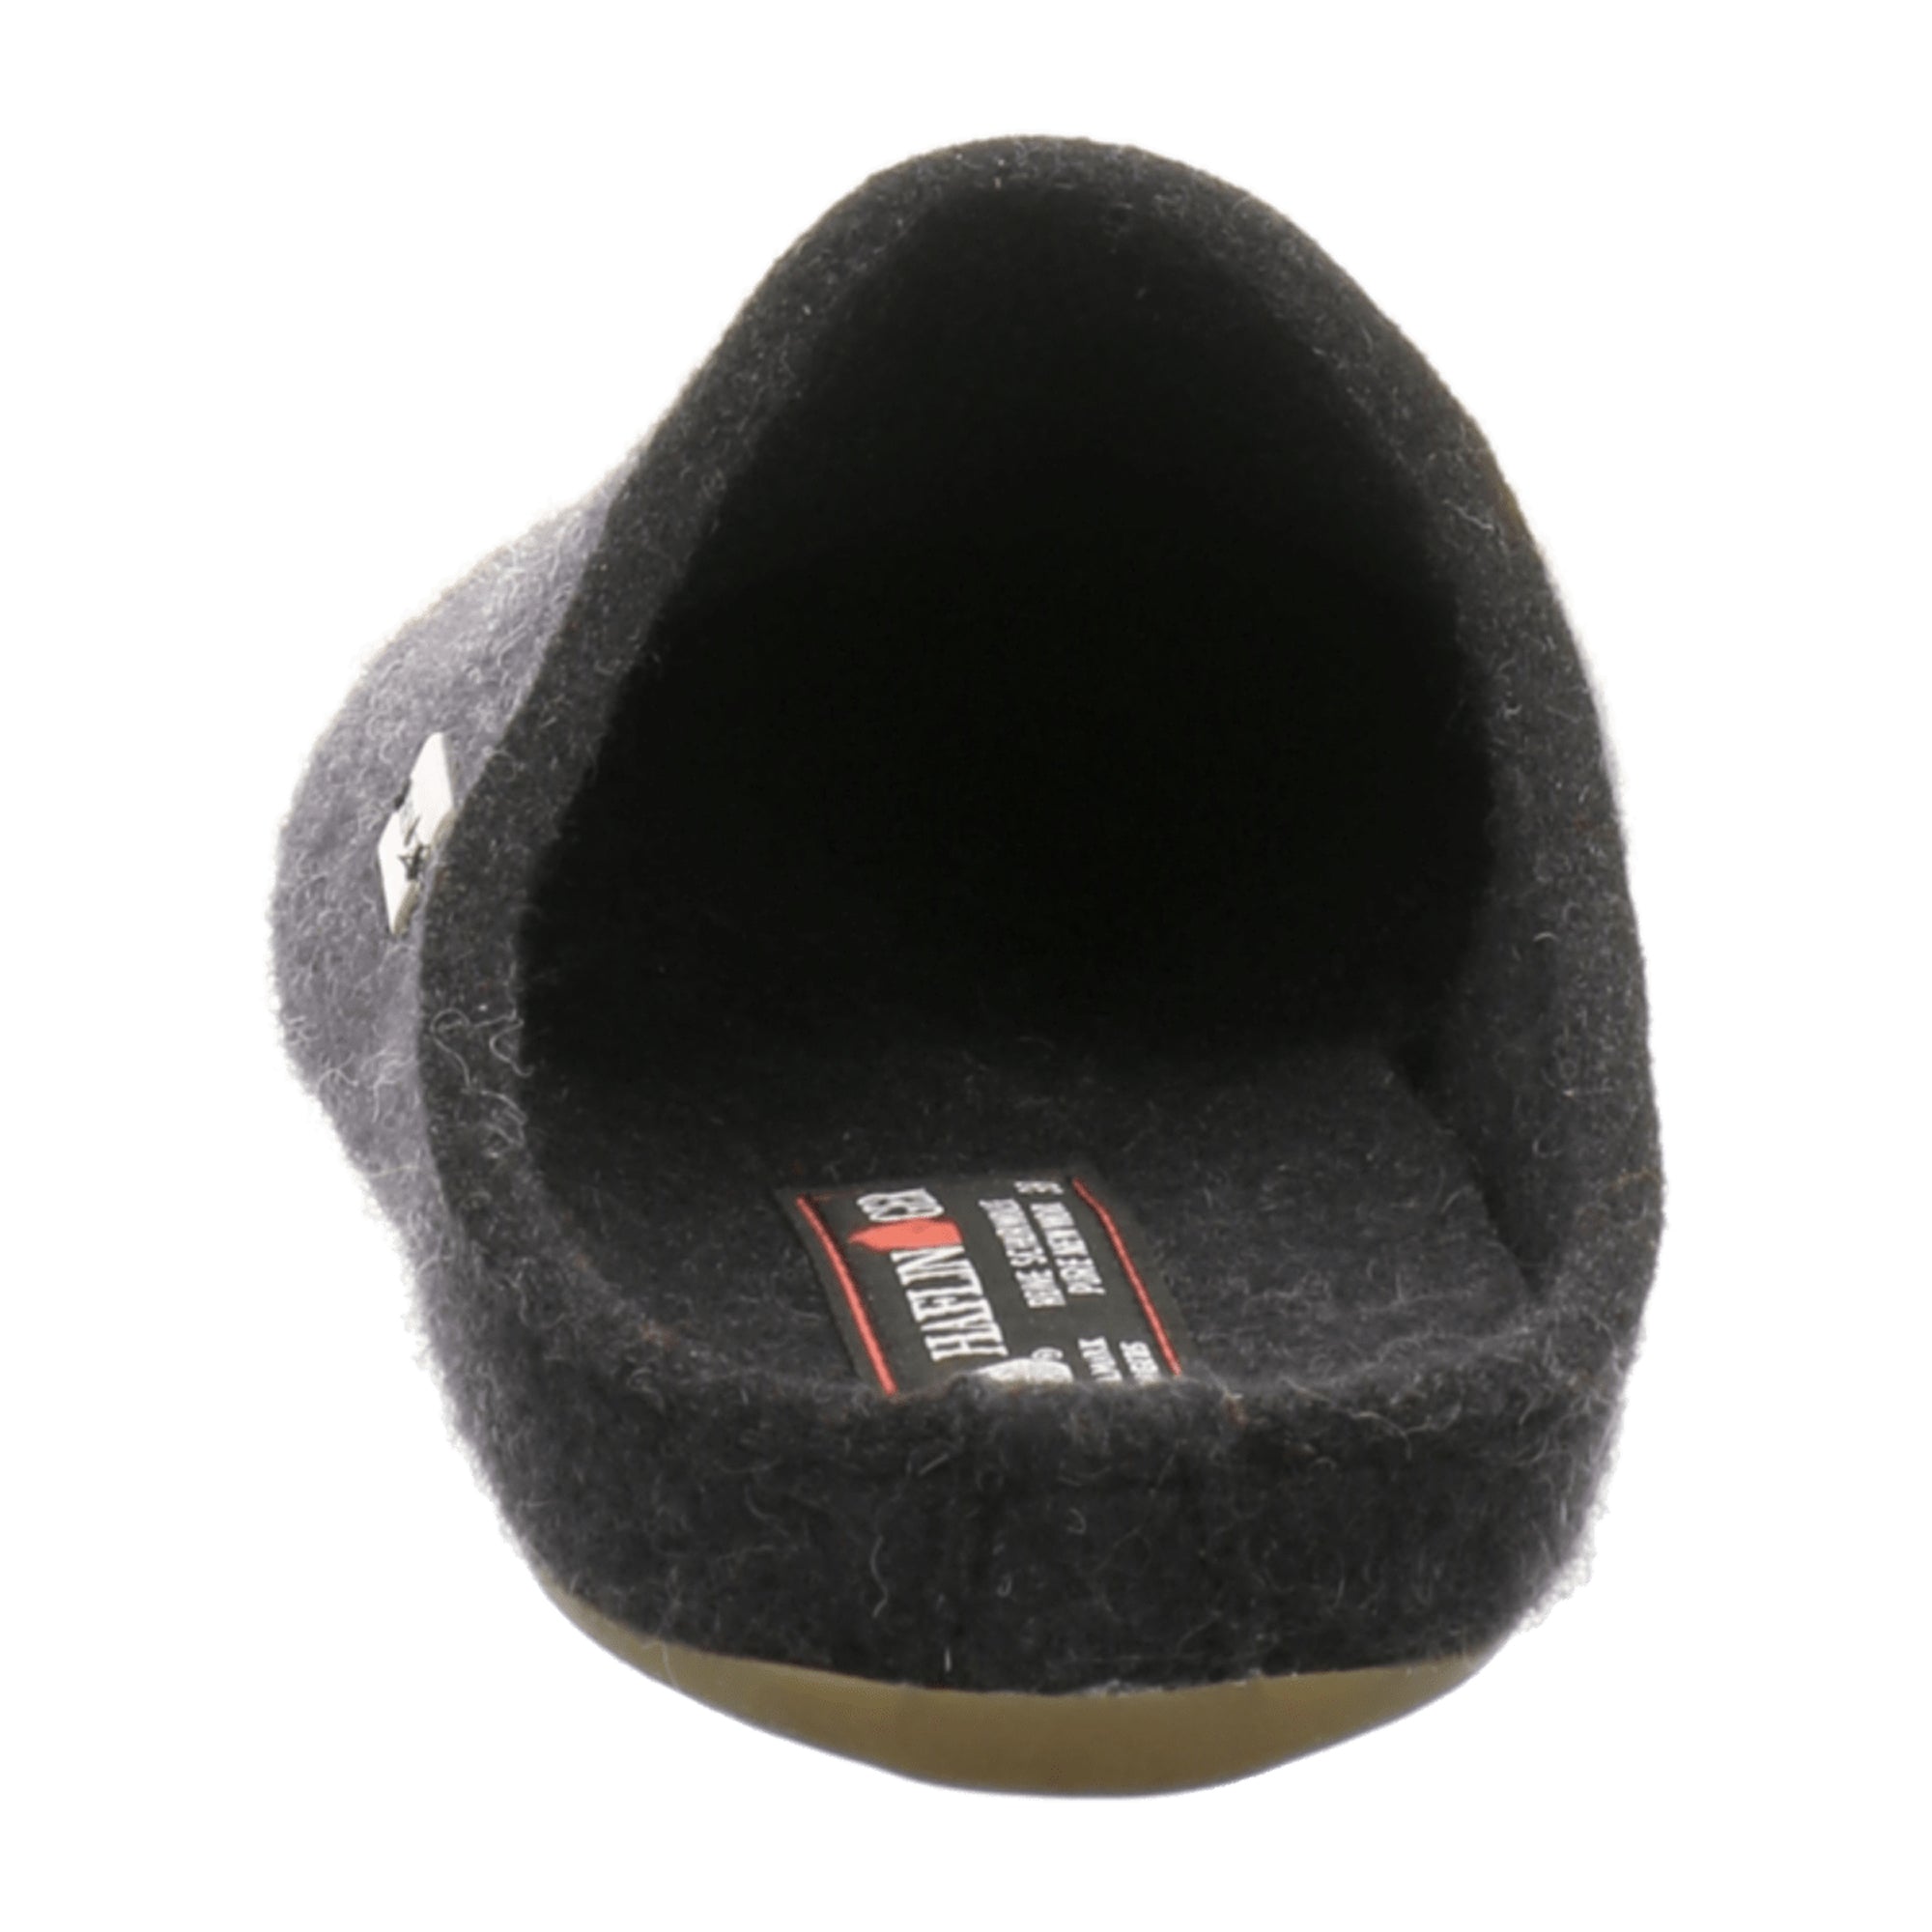 Haflinger Everest Fundus Men's Slippers, Grey - Comfortable & Durable